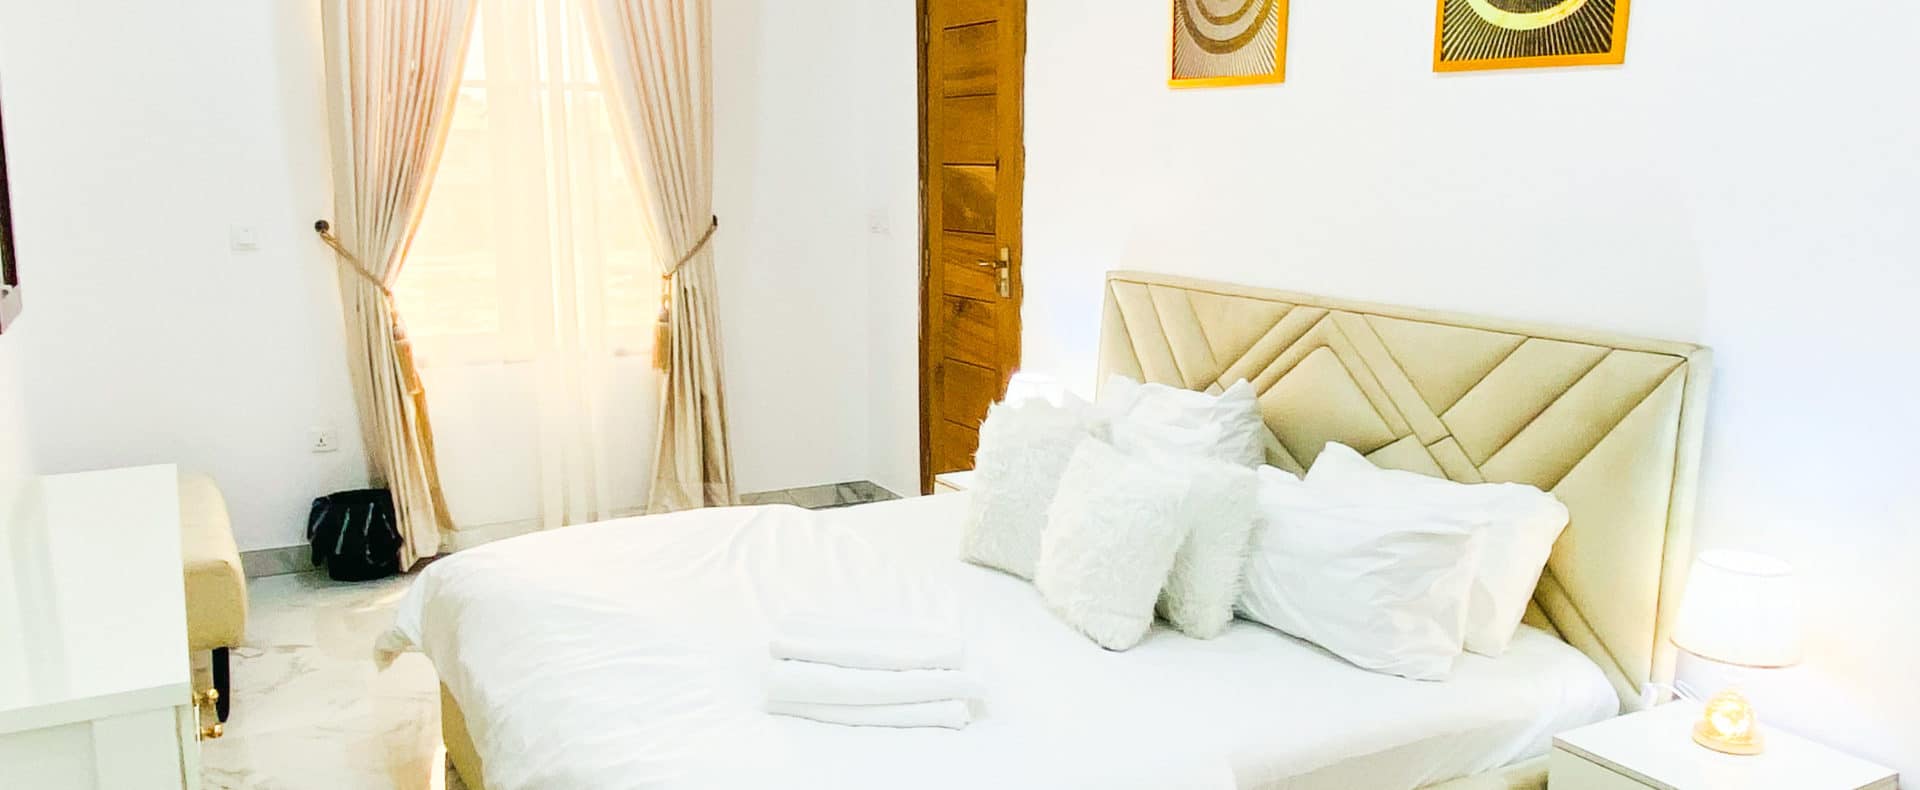 Luxury Private Two Bedroom Apartment In Lekki Phase 1 Lagos Nigeria